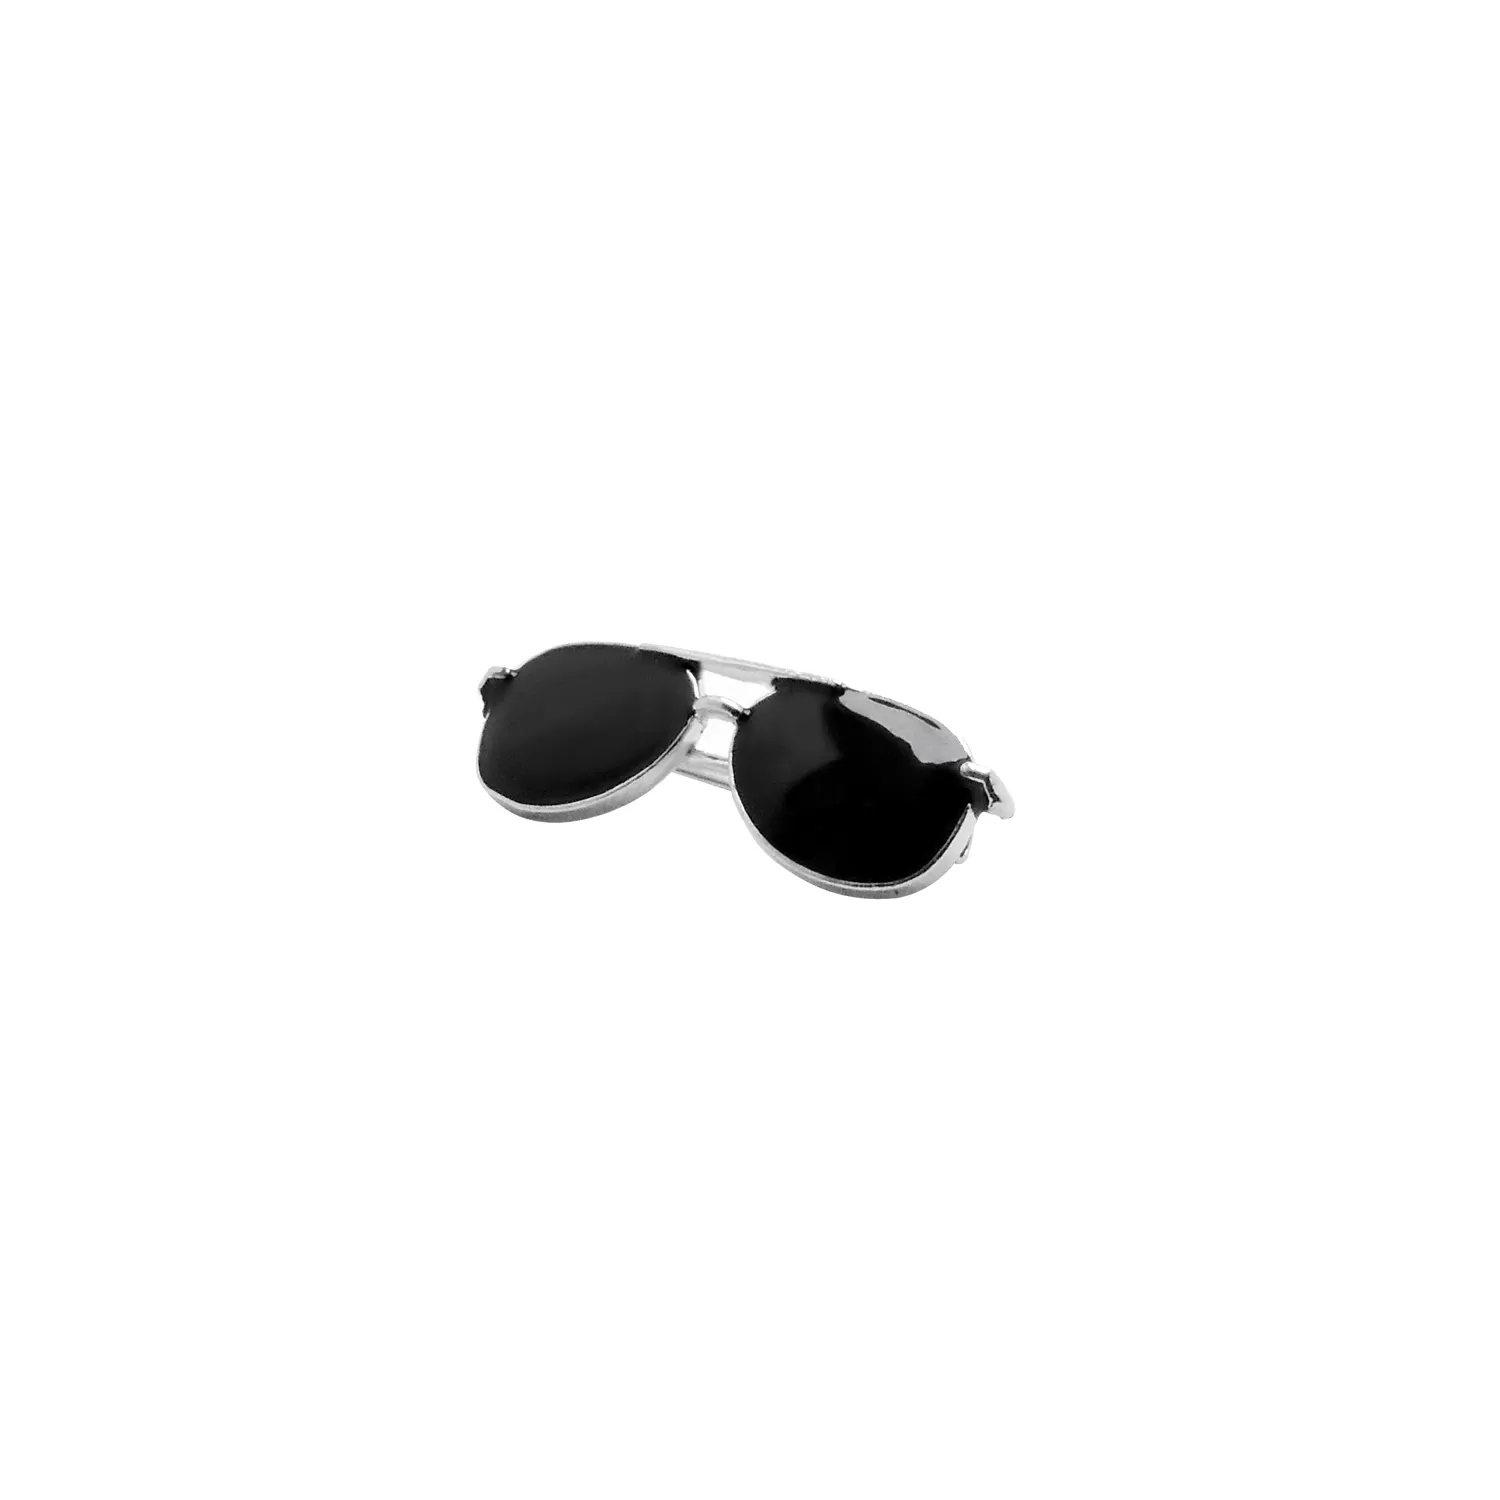 Silver Metal Sunglasses Label Pin, 3 image